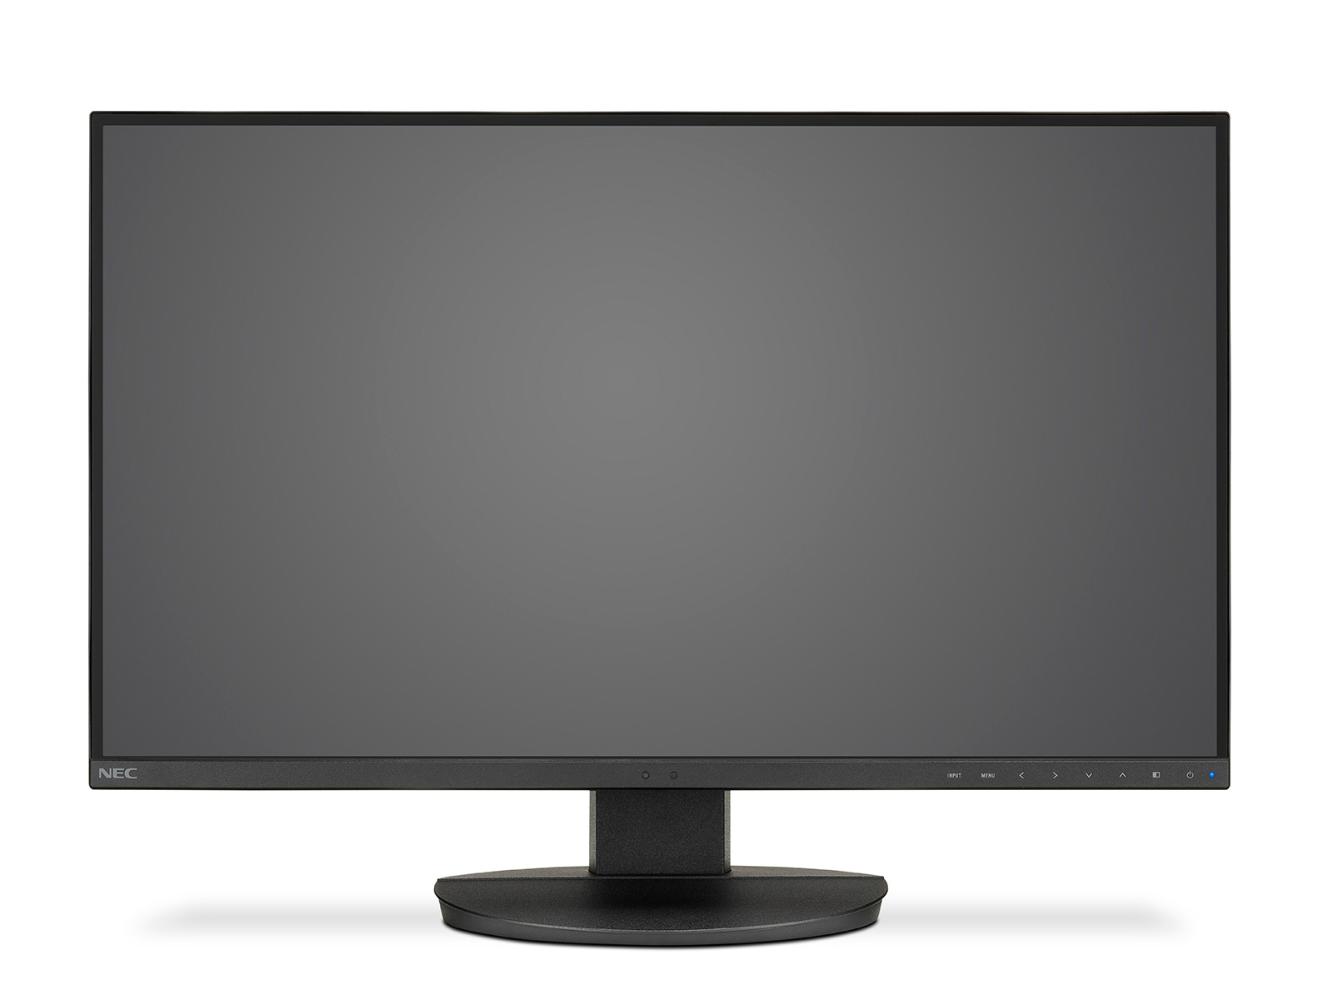 Image of NEC MultiSync EA271Q - LED-Monitor - 68cm (27) - 2560 x 1440 WQHD - Plane to Line Switching (PLS) - 350 cd/m² - 1000:1 - 6 ms - DisplayPort, HDMI, DVI-D, USB-C - Lautsprecher - weiß (60004650)